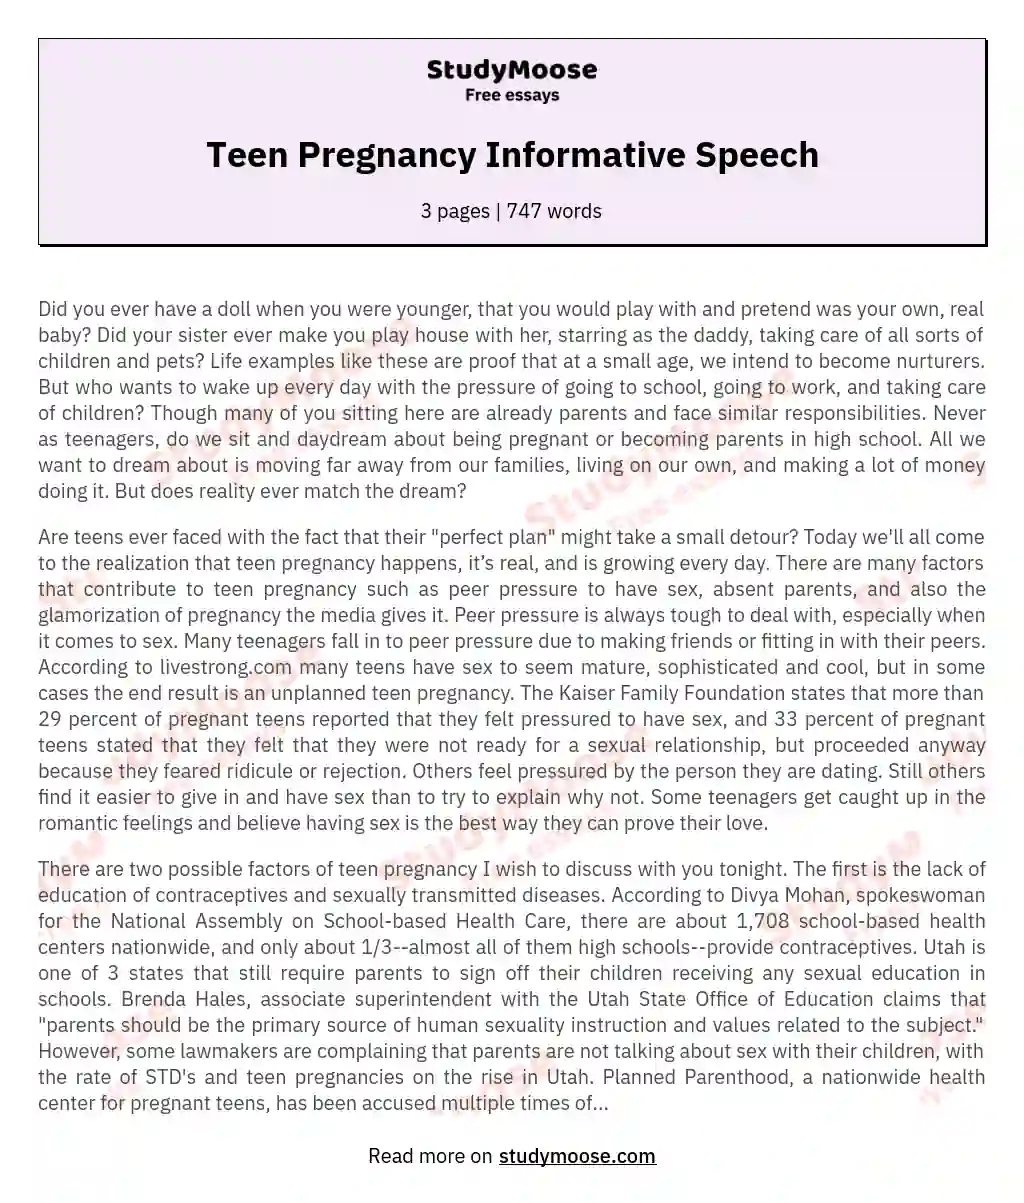 Teen Pregnancy Informative Speech essay